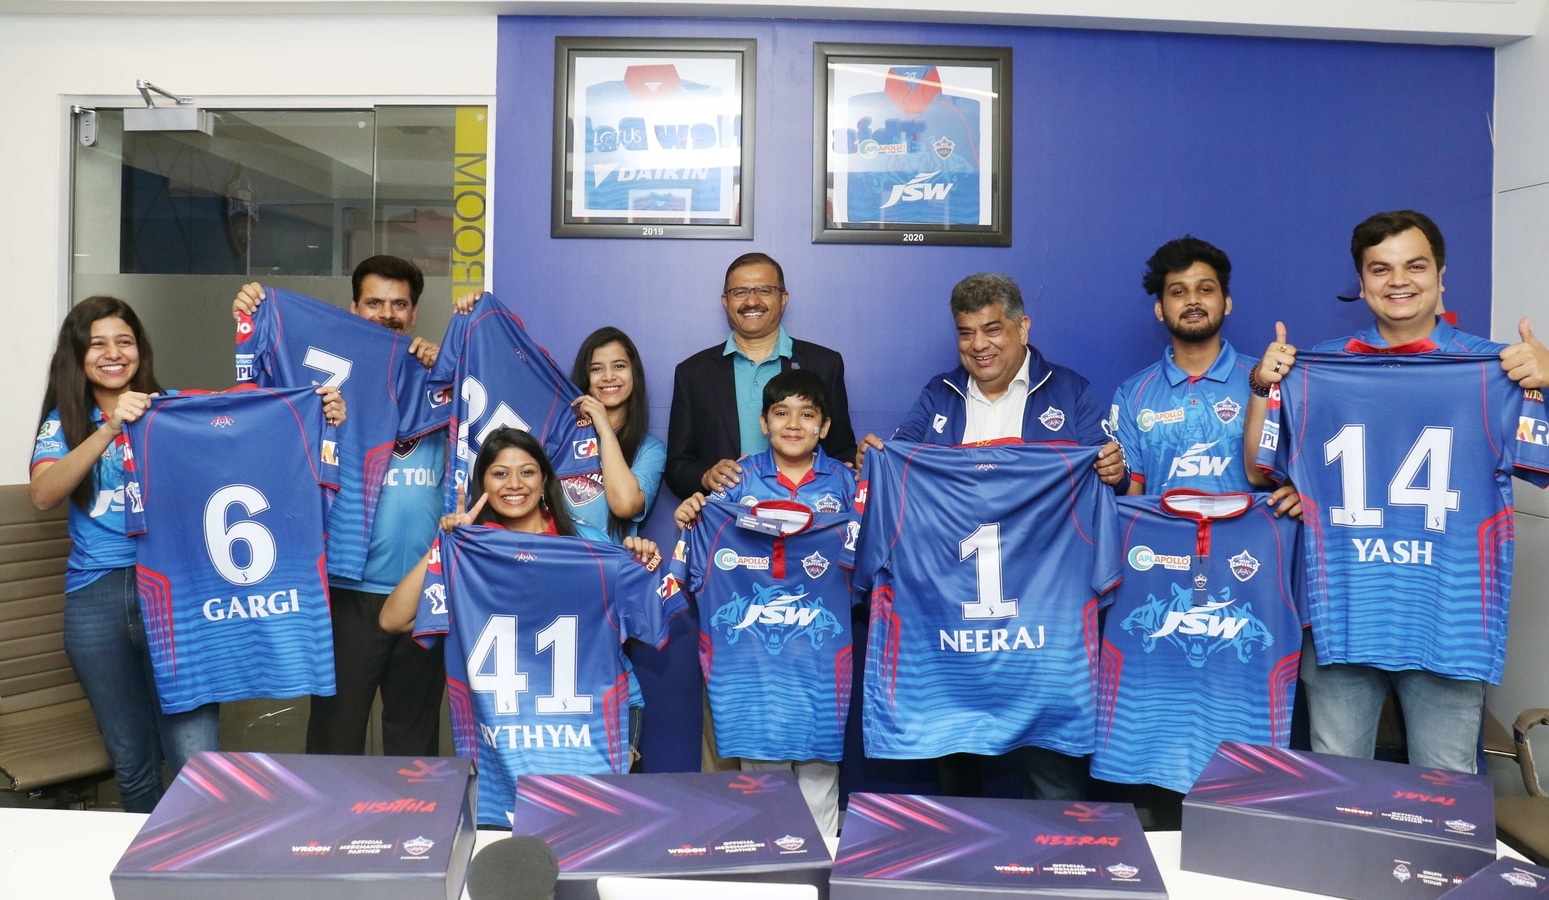 Delhi Capitals (DC) unveil their new jersey for IPL 2020